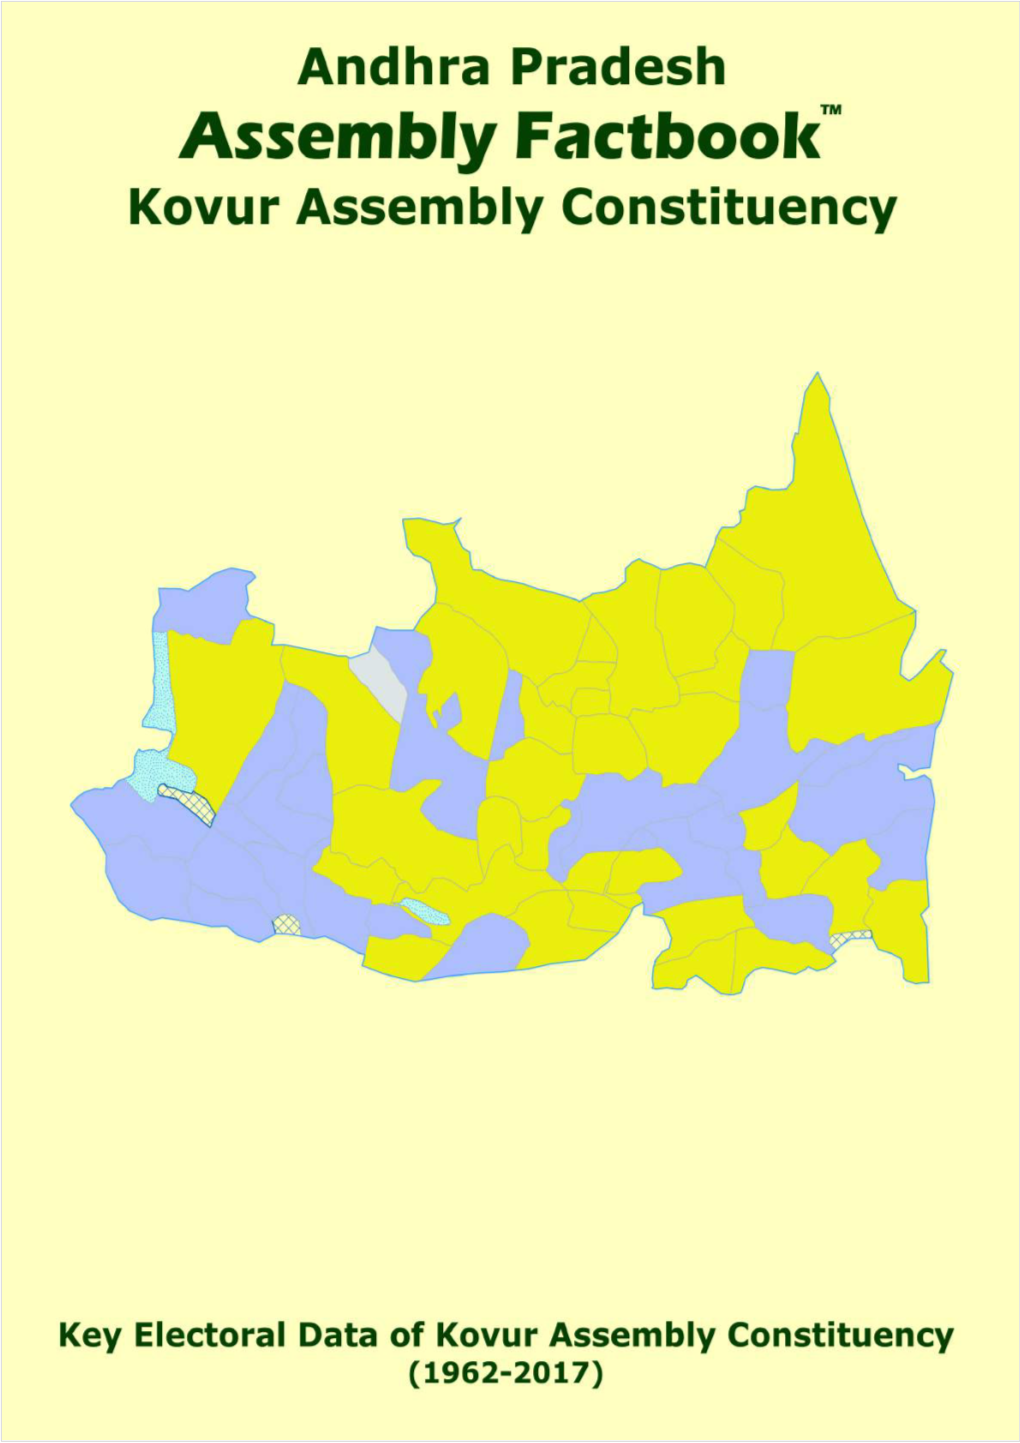 Kovur Assembly Andhra Pradesh Factbook